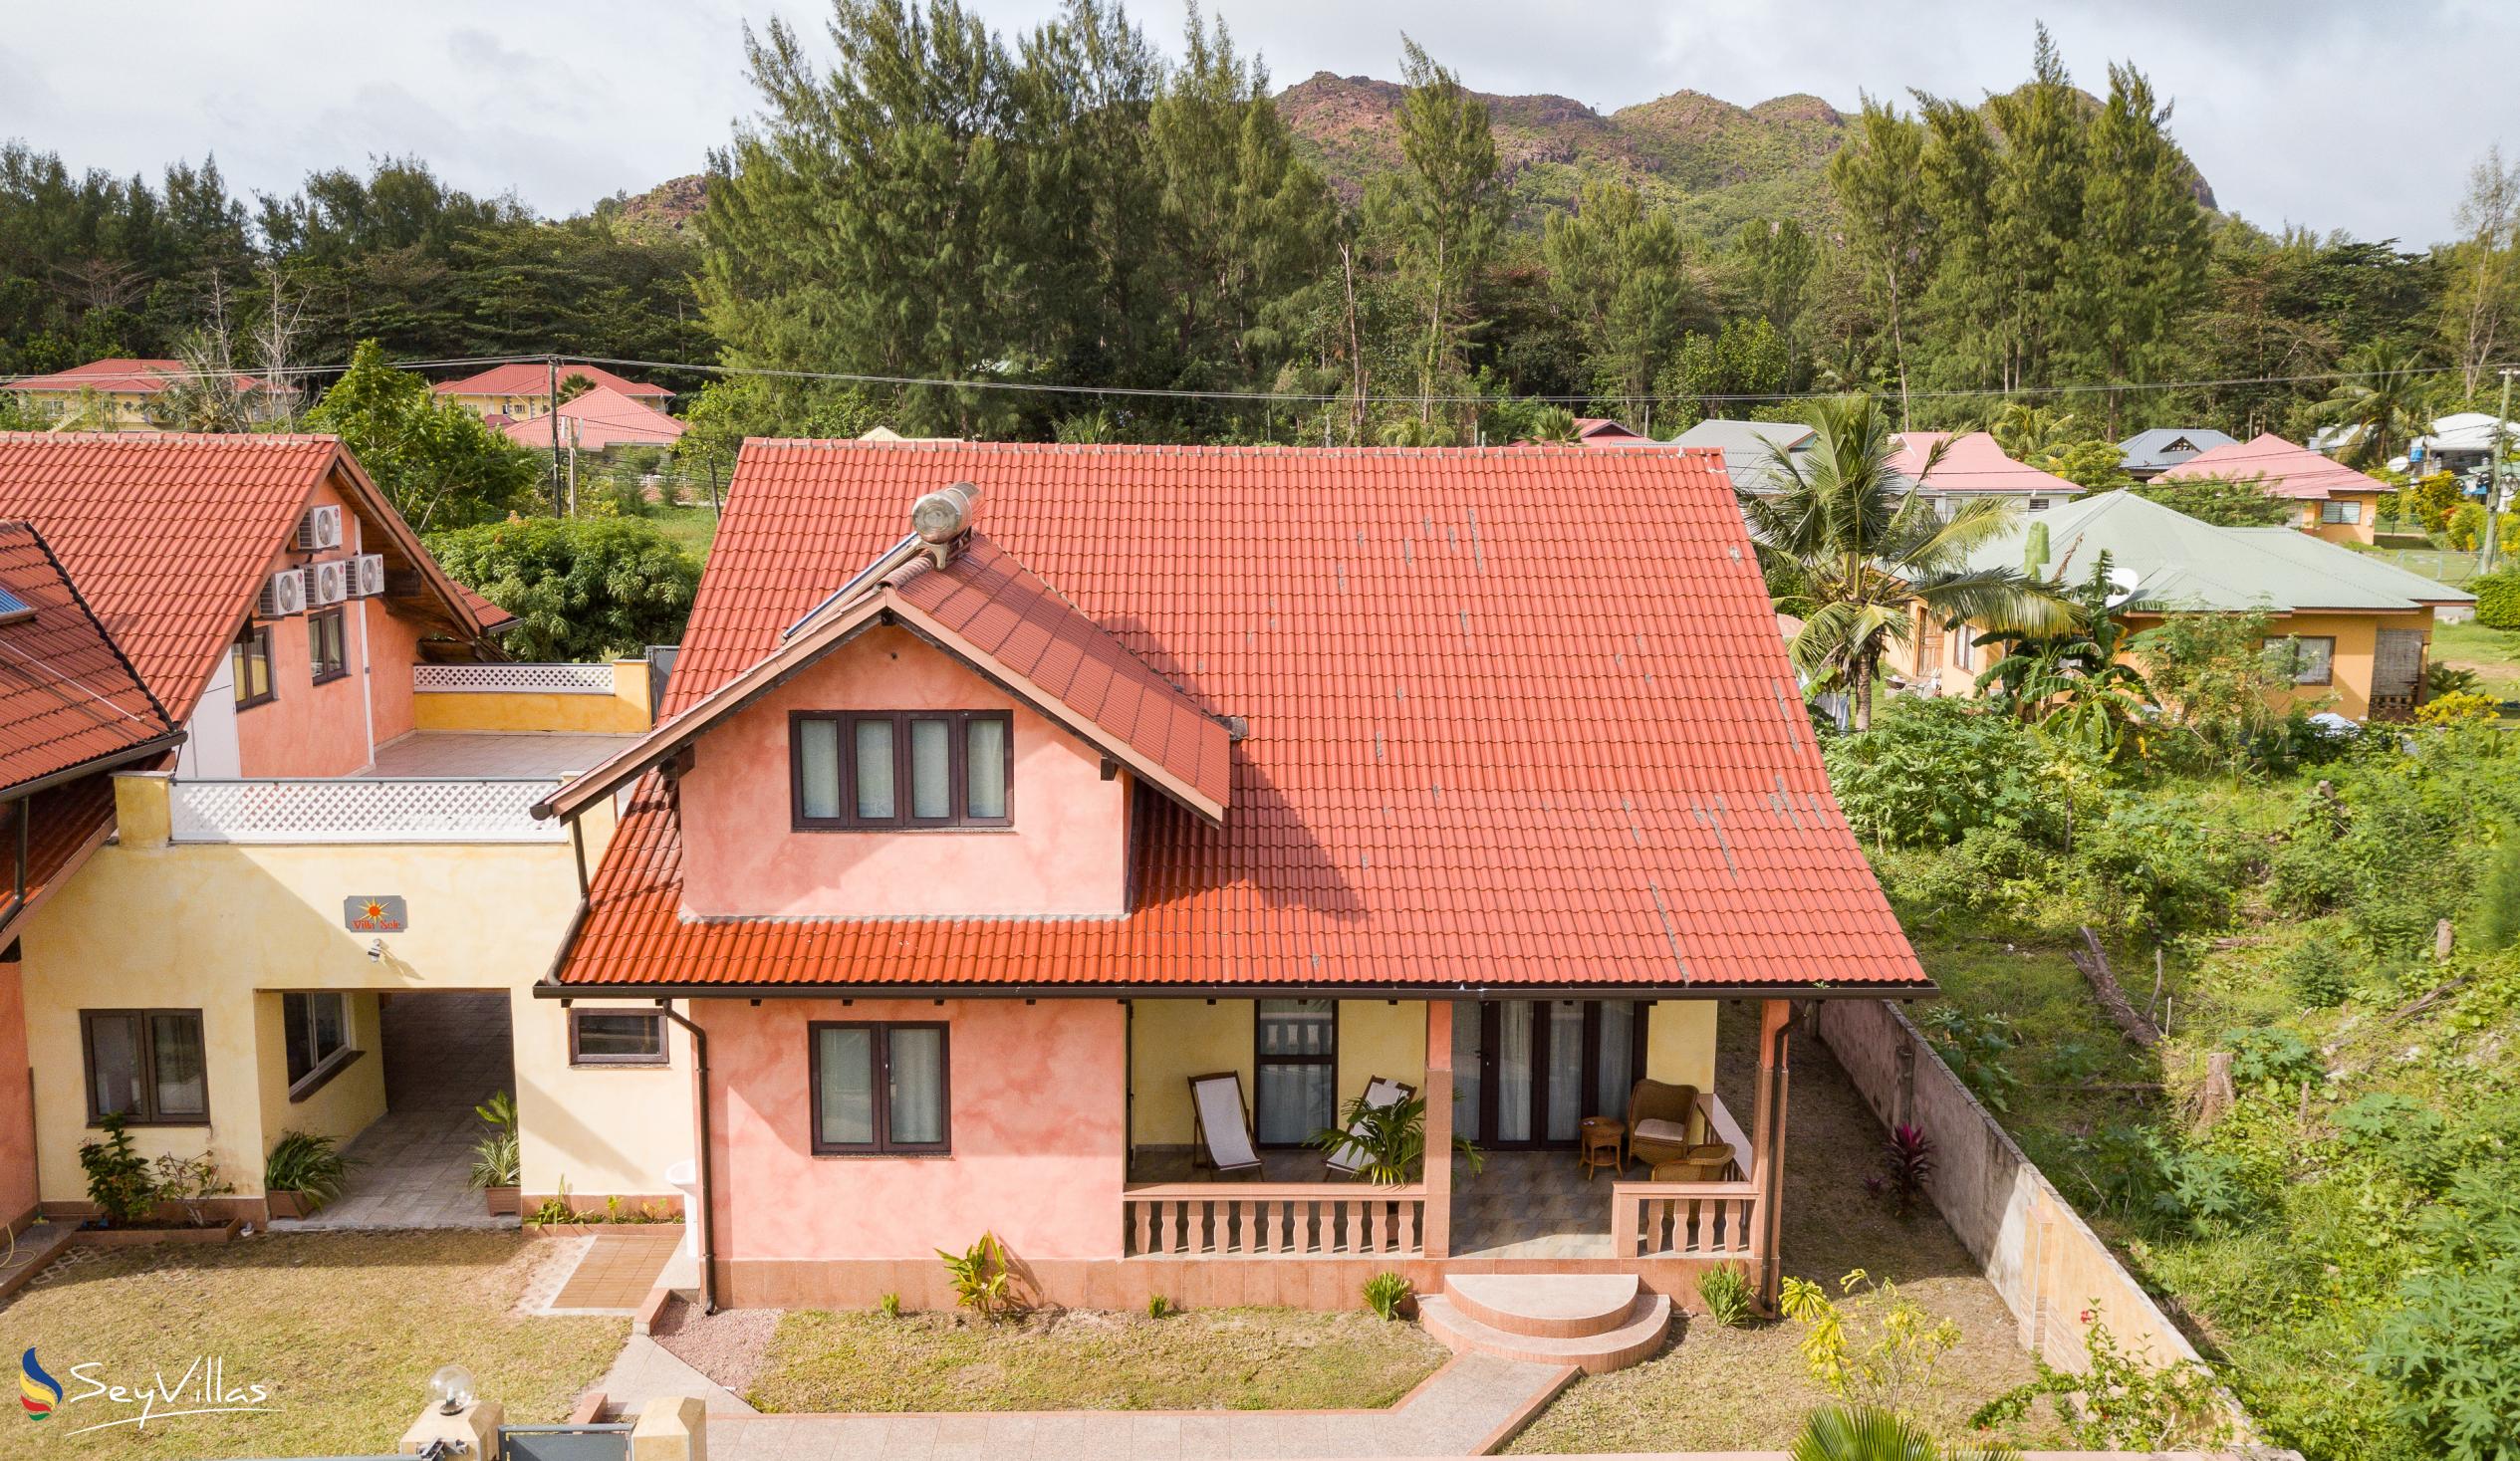 Photo 5: Villa Sole - Outdoor area - Praslin (Seychelles)